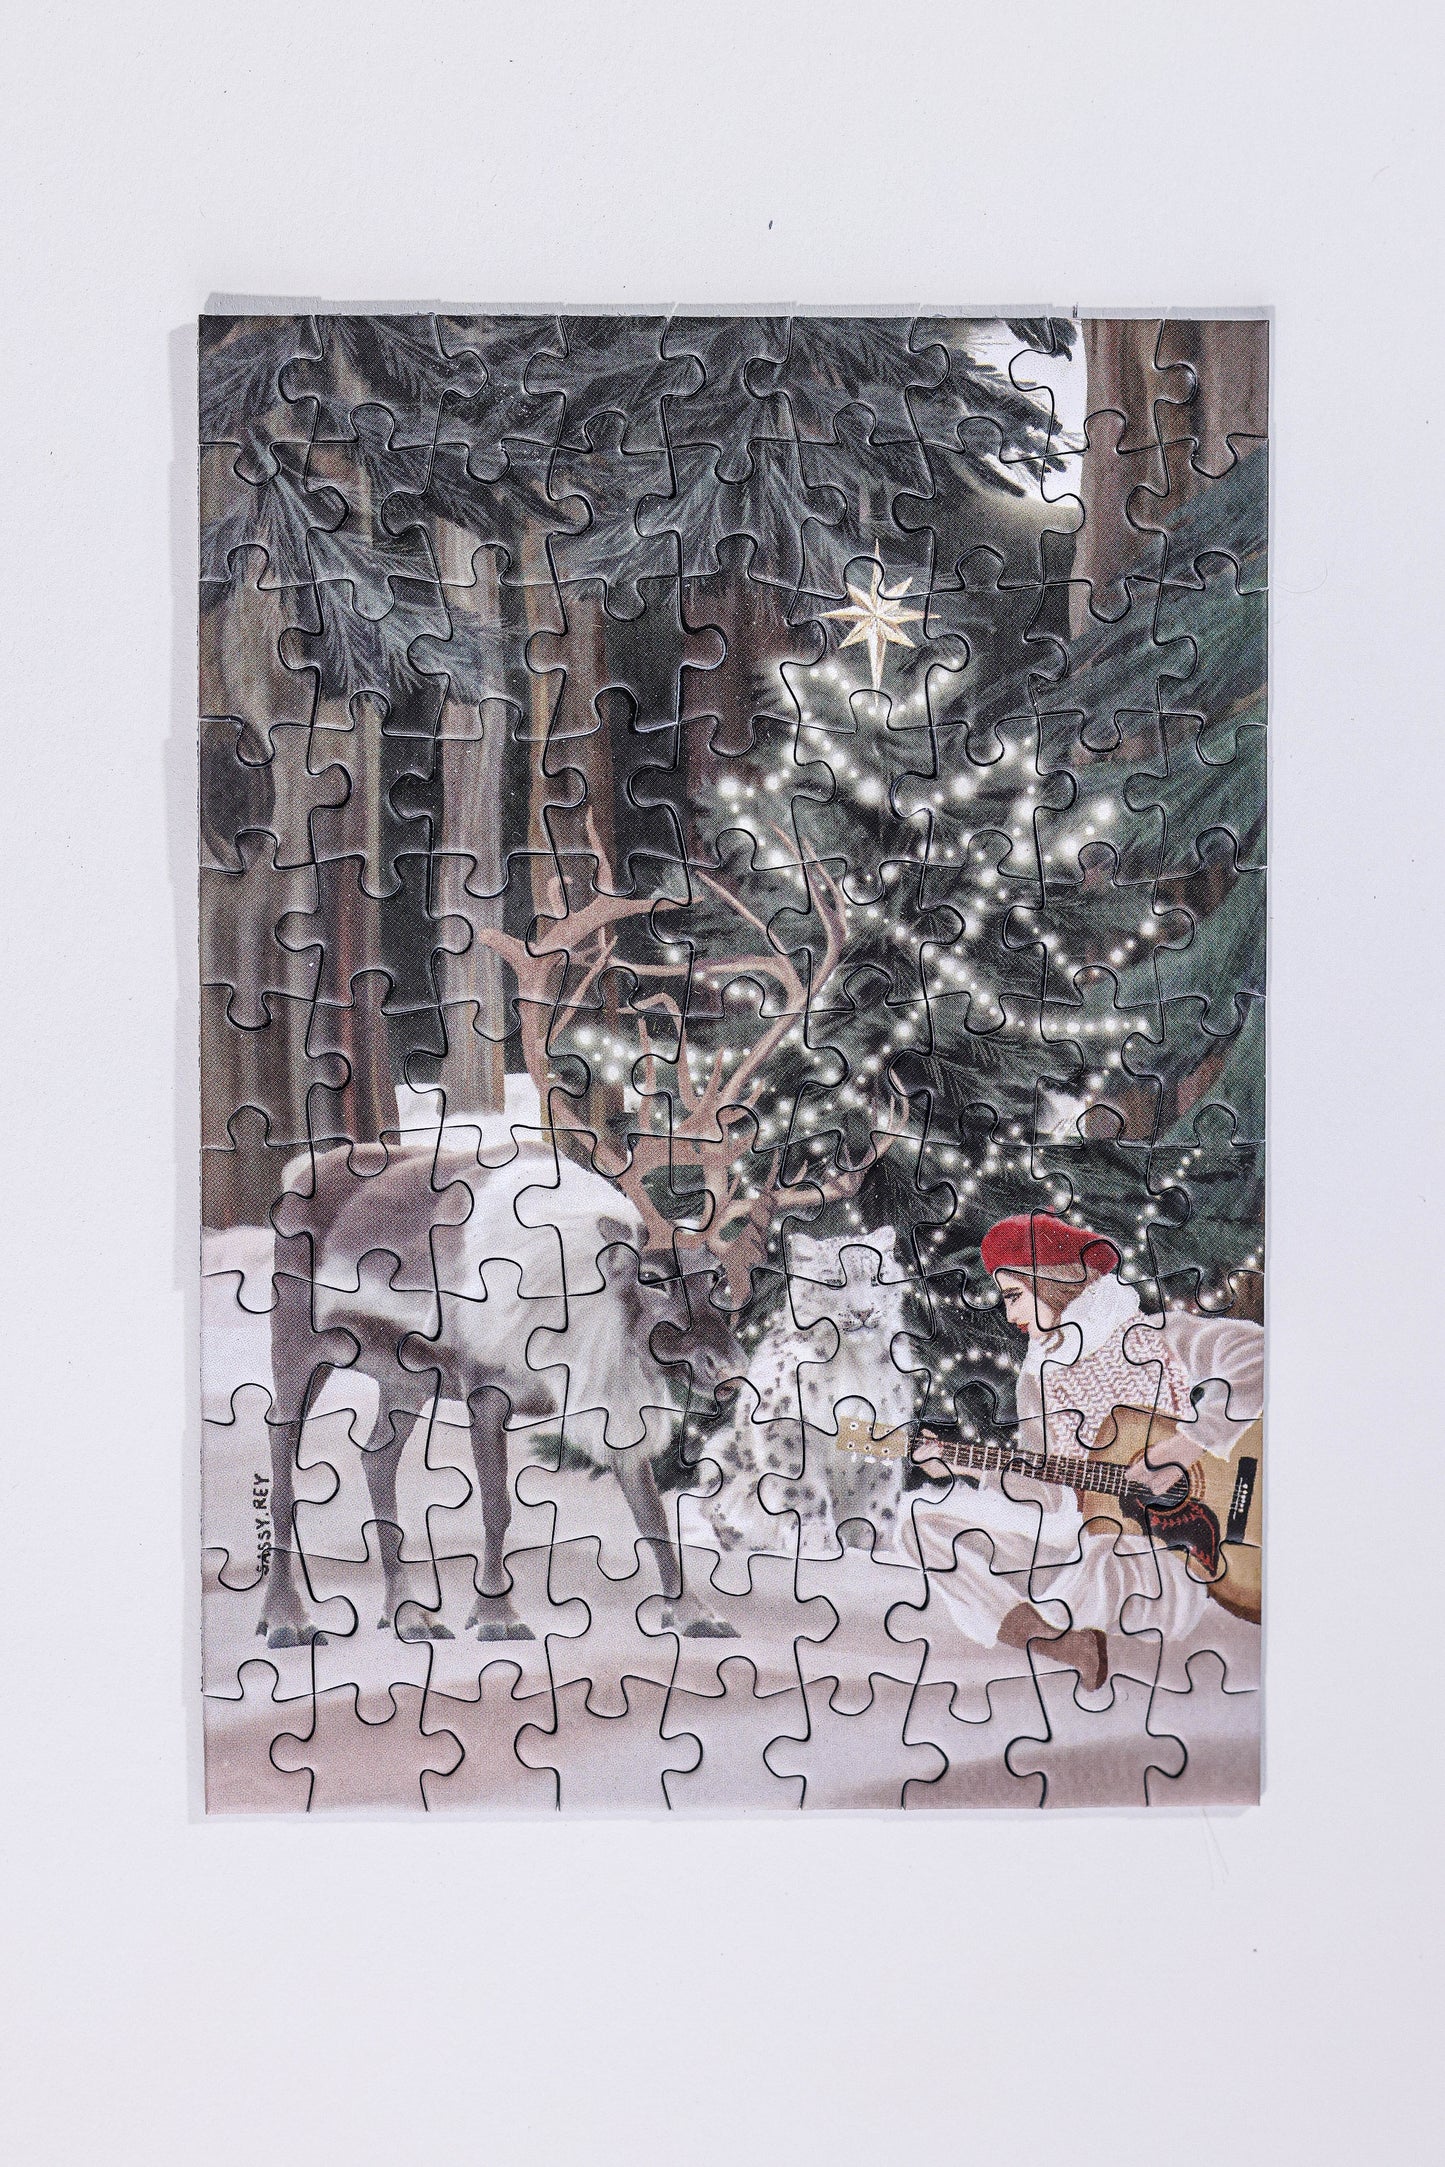 “Christmas sing along” by Les minis de RoseWillie and La Fabrique, 99 pieces